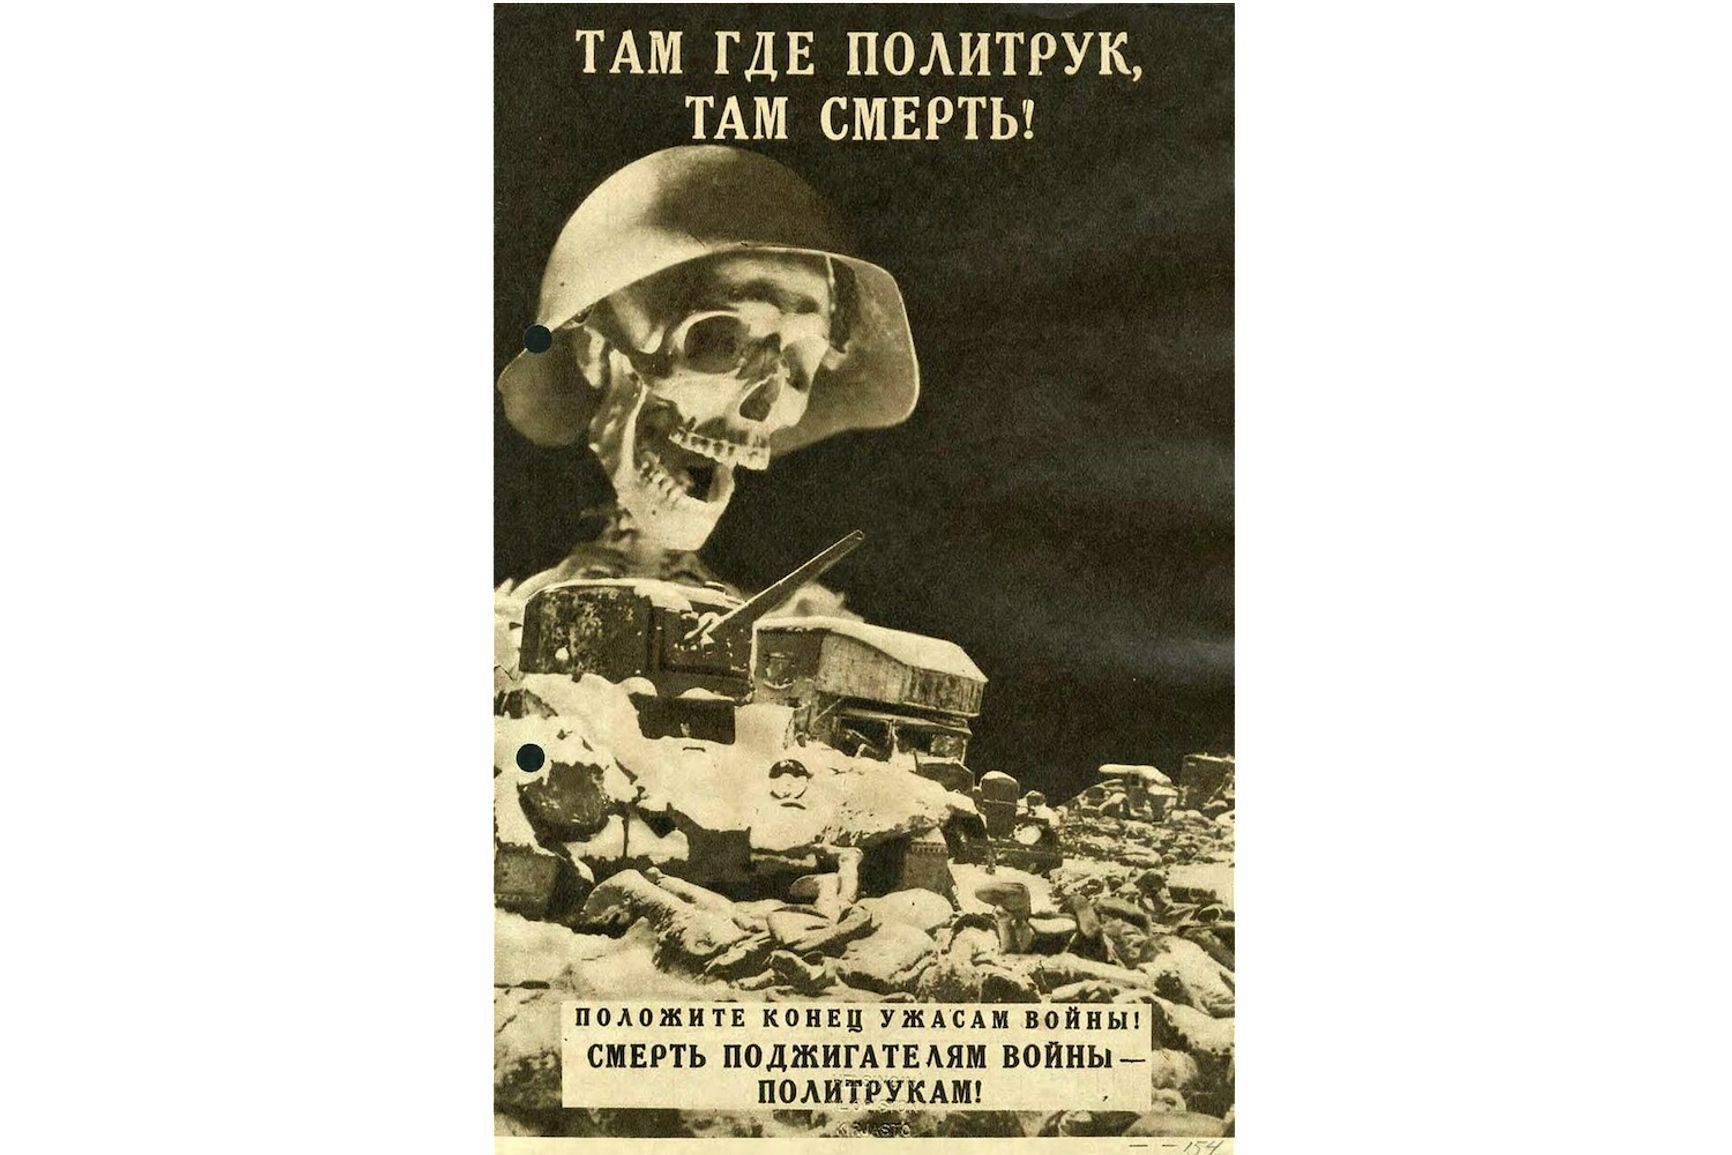 Finnish Winter War leaflet